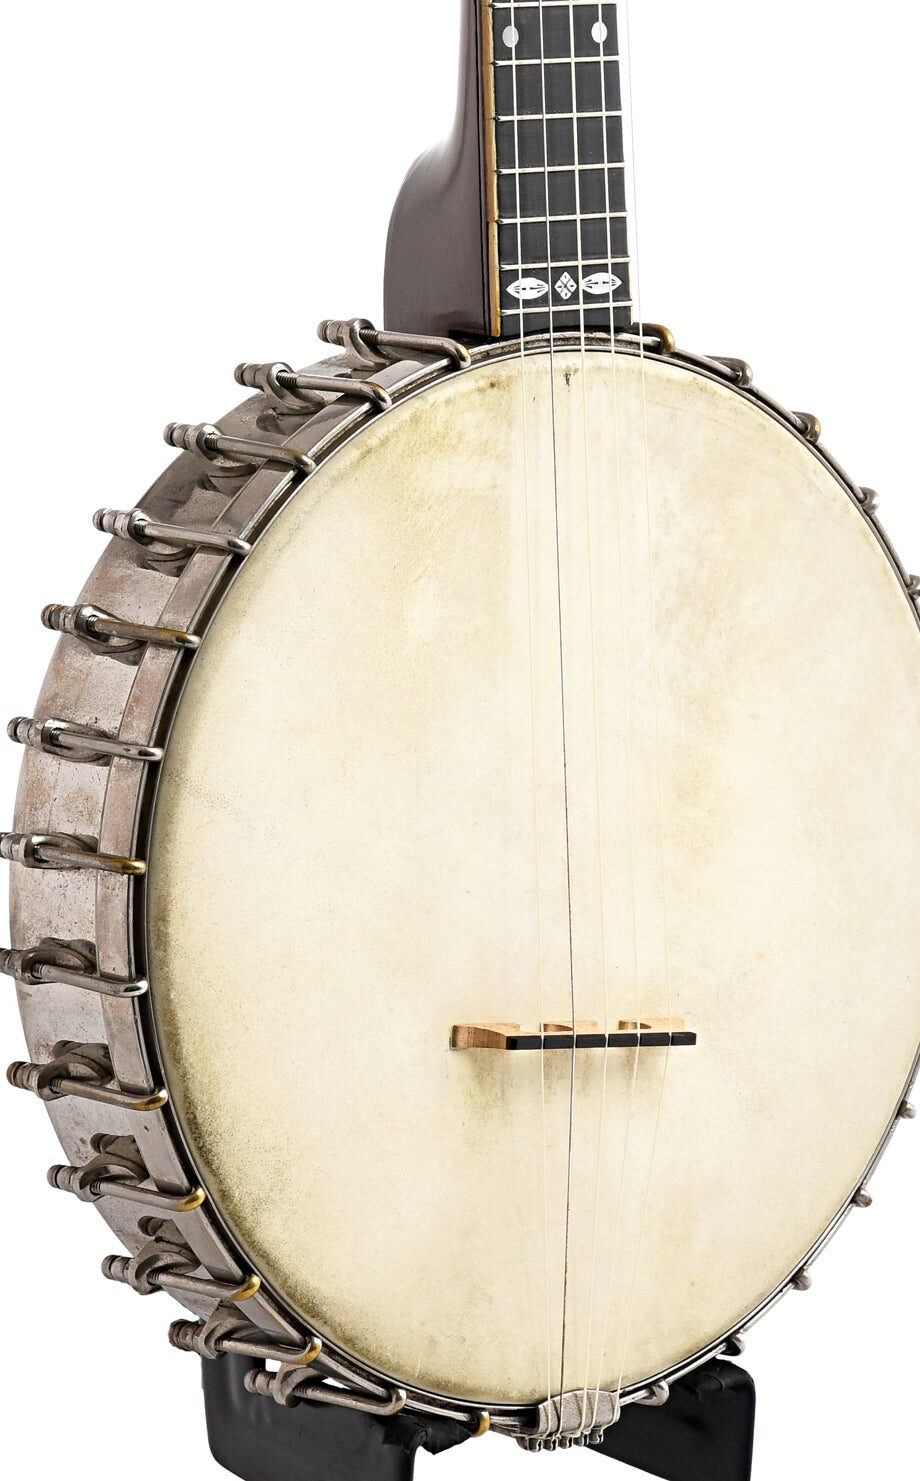 purchase banjos